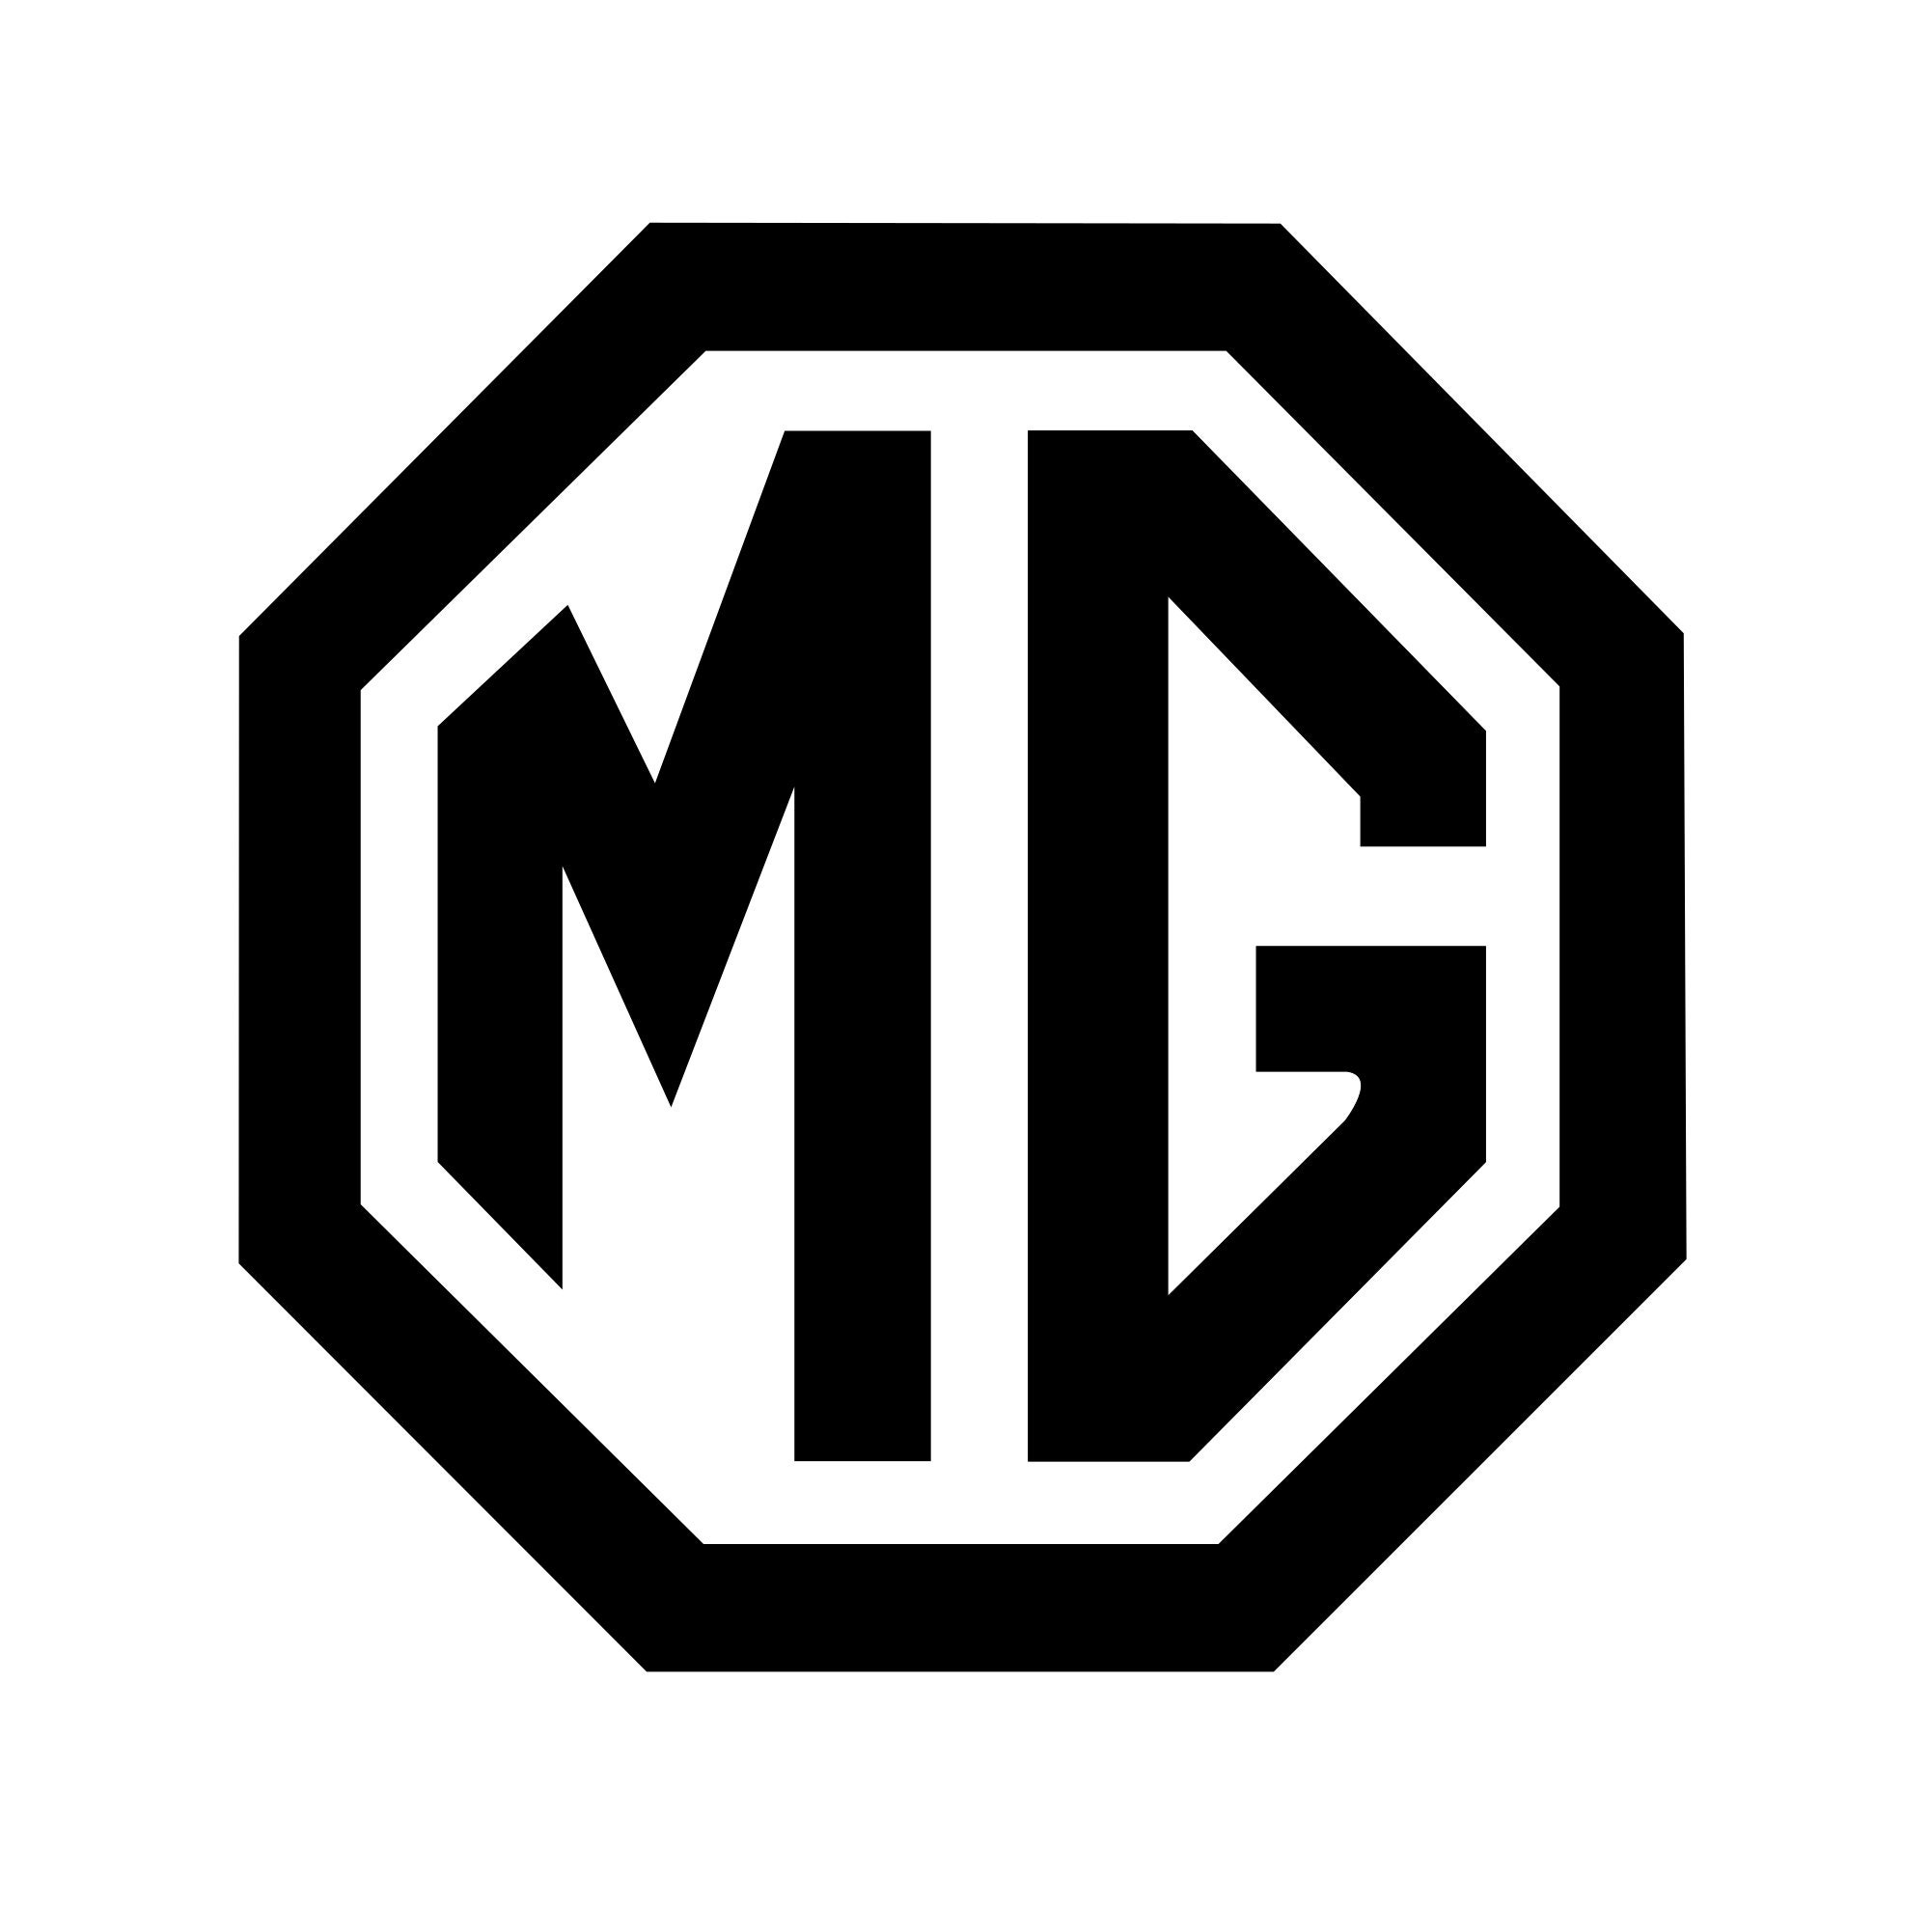 Masculine, Elegant Logo Design for MG 4x4 accessoires 4x4 www.mg4x4.com by  kaatem